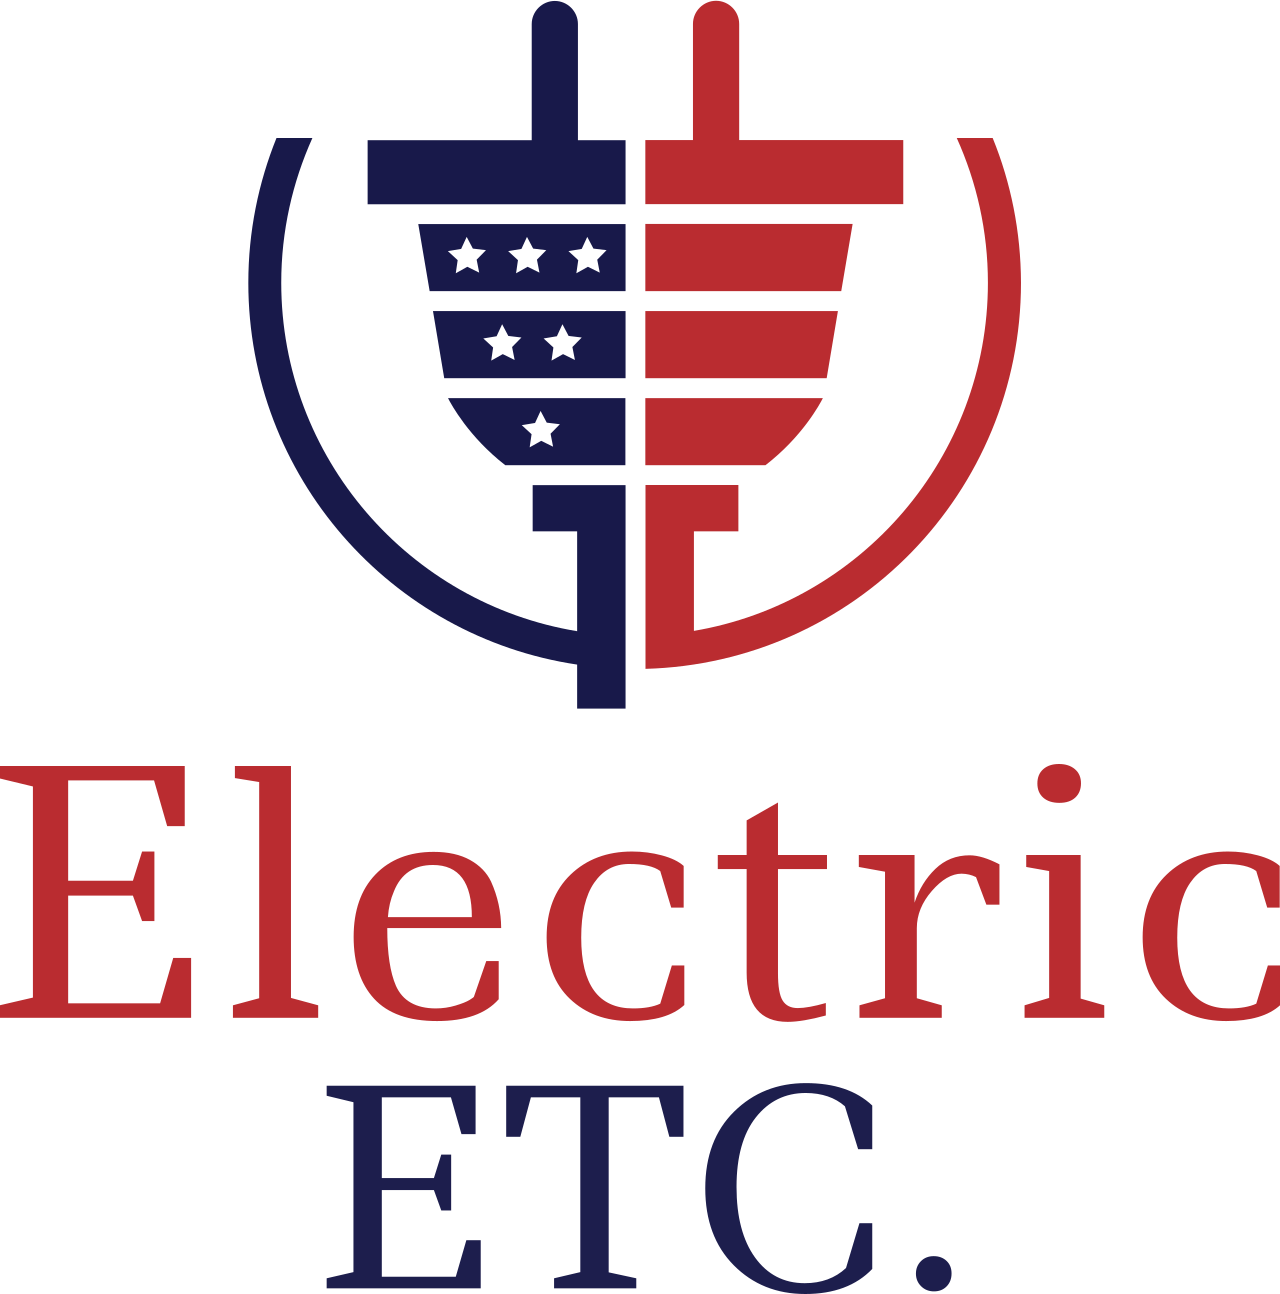 Electric's logo